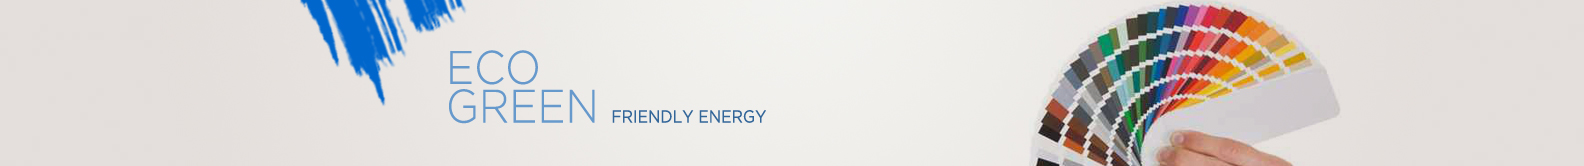 ECO Green Friendly Energy